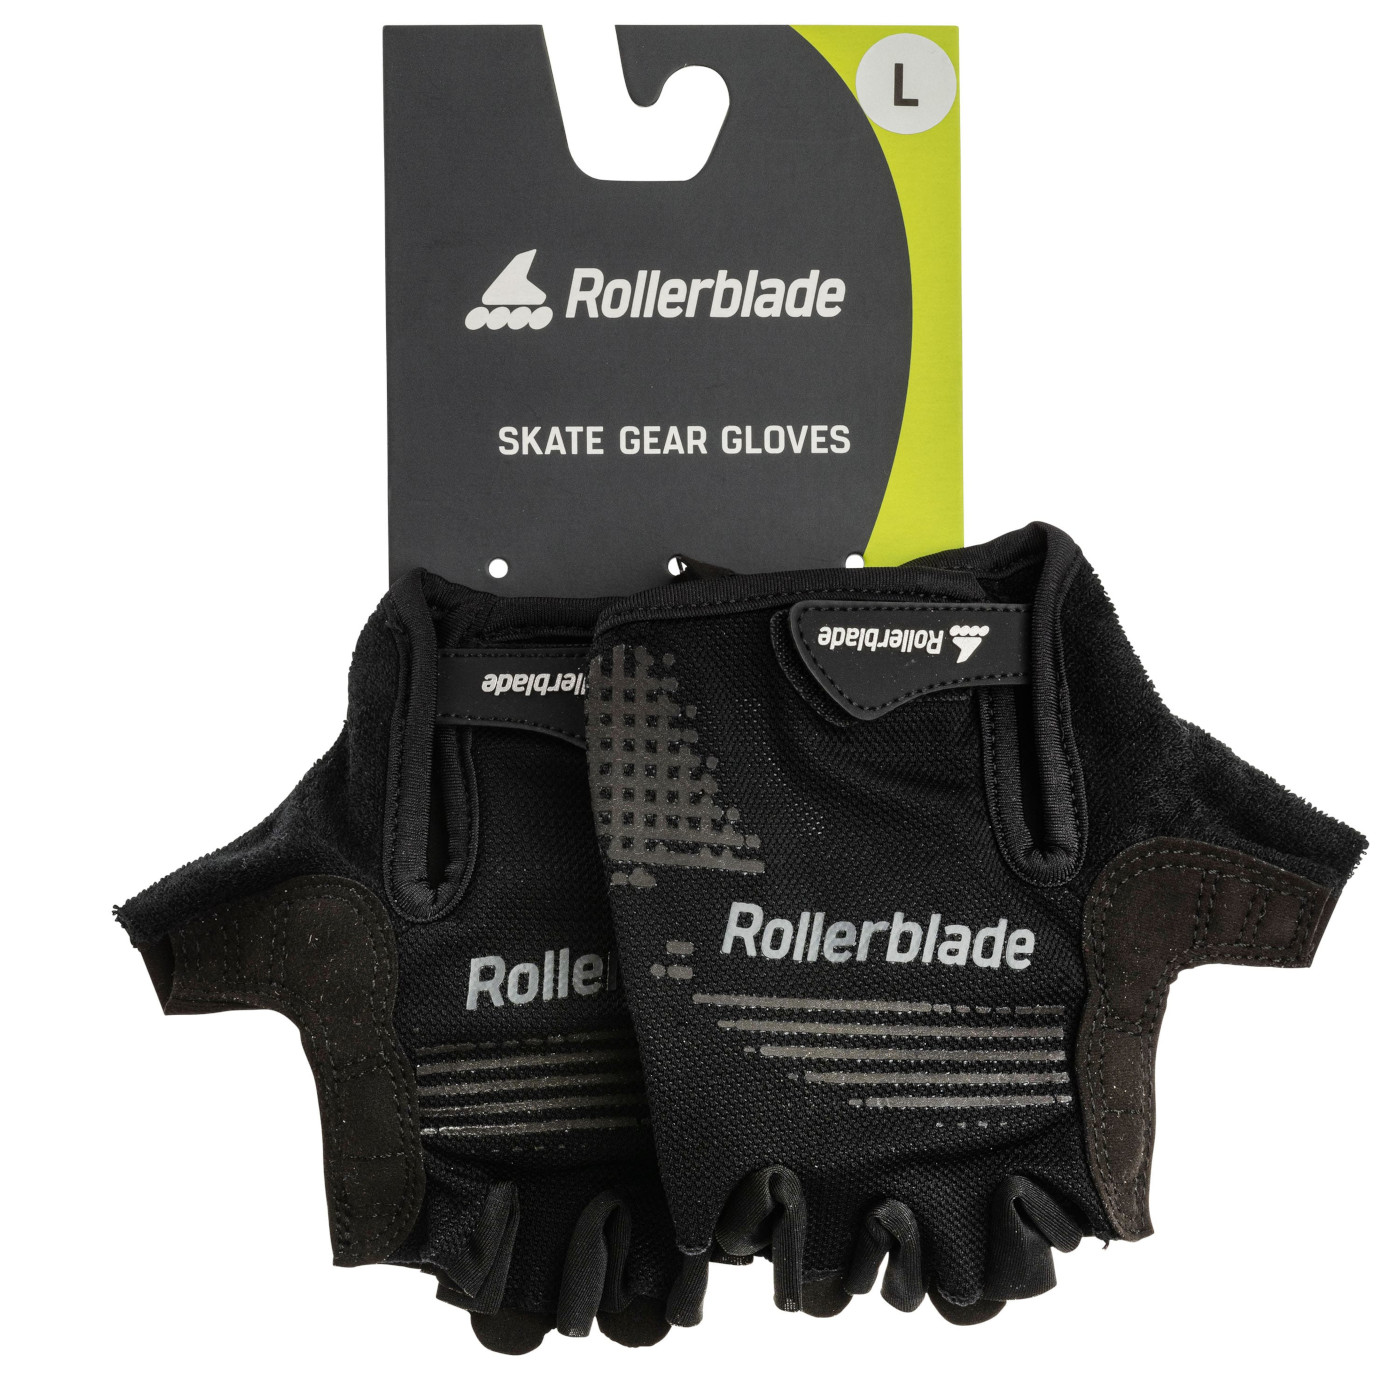 Productfoto van Rollerblade Skate Gear Protection Gloves - black